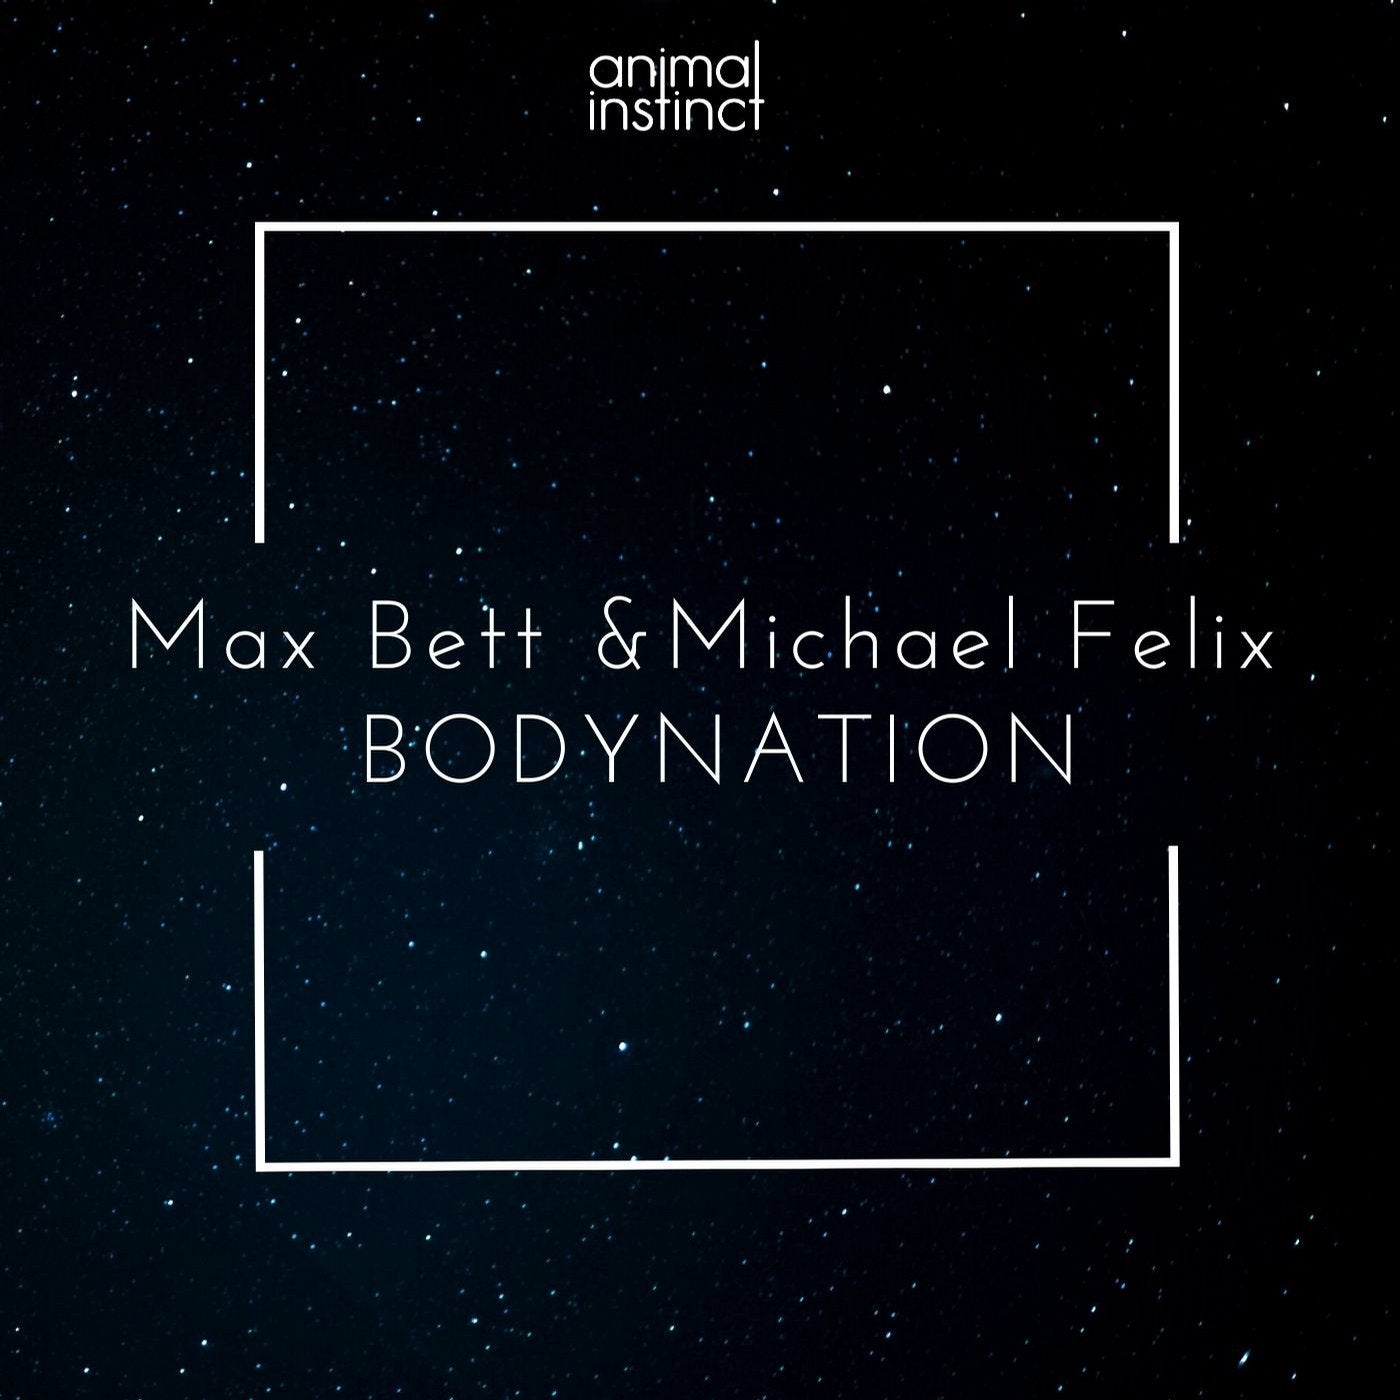 Max Bett And Michael Felix - Bodynation